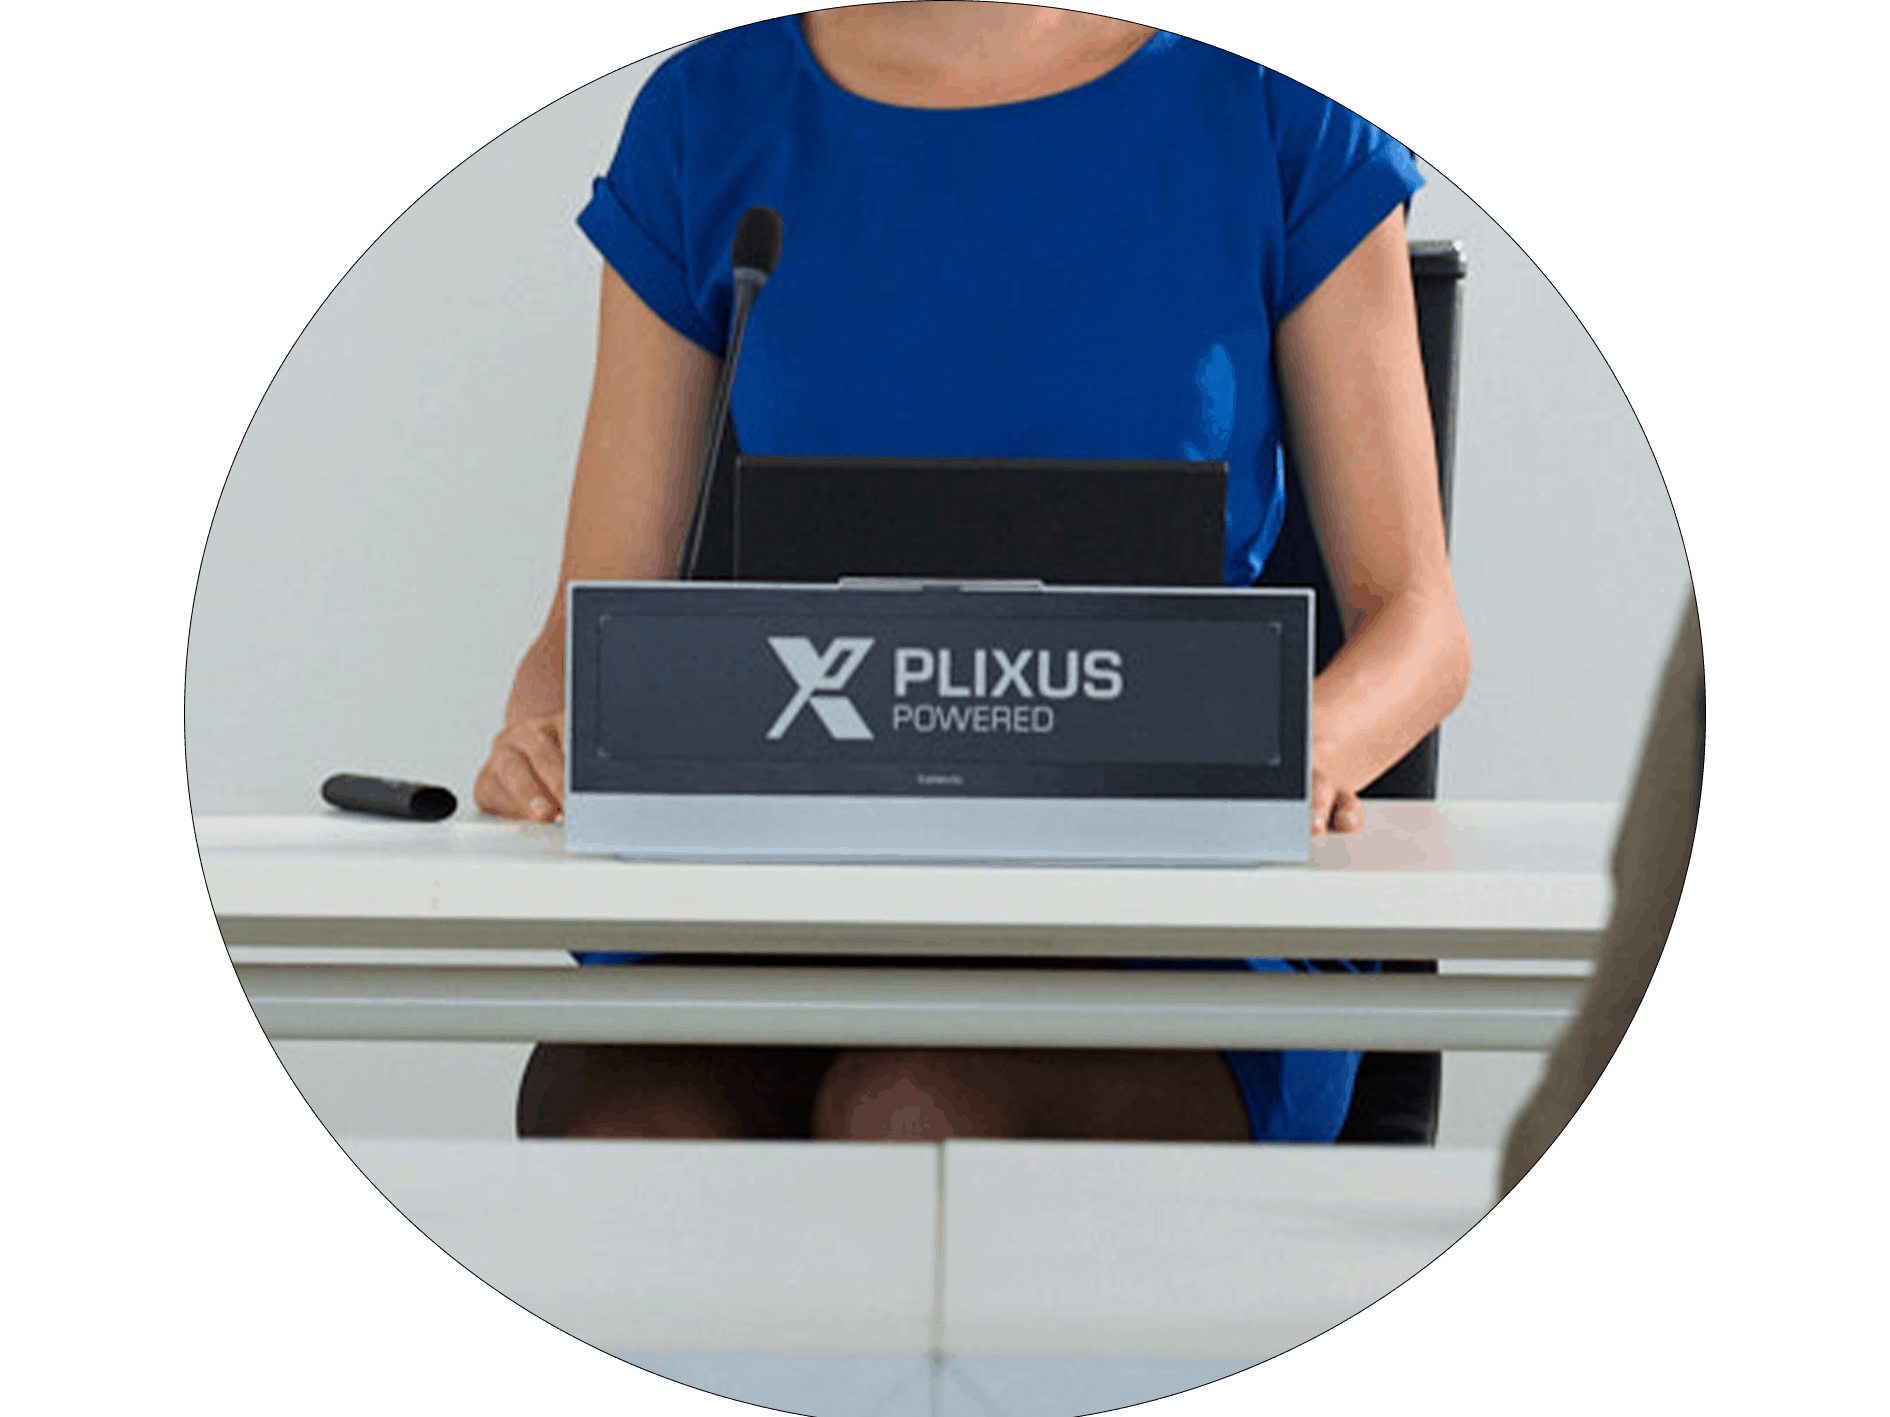 Plixus Nameplate - Televic Conference